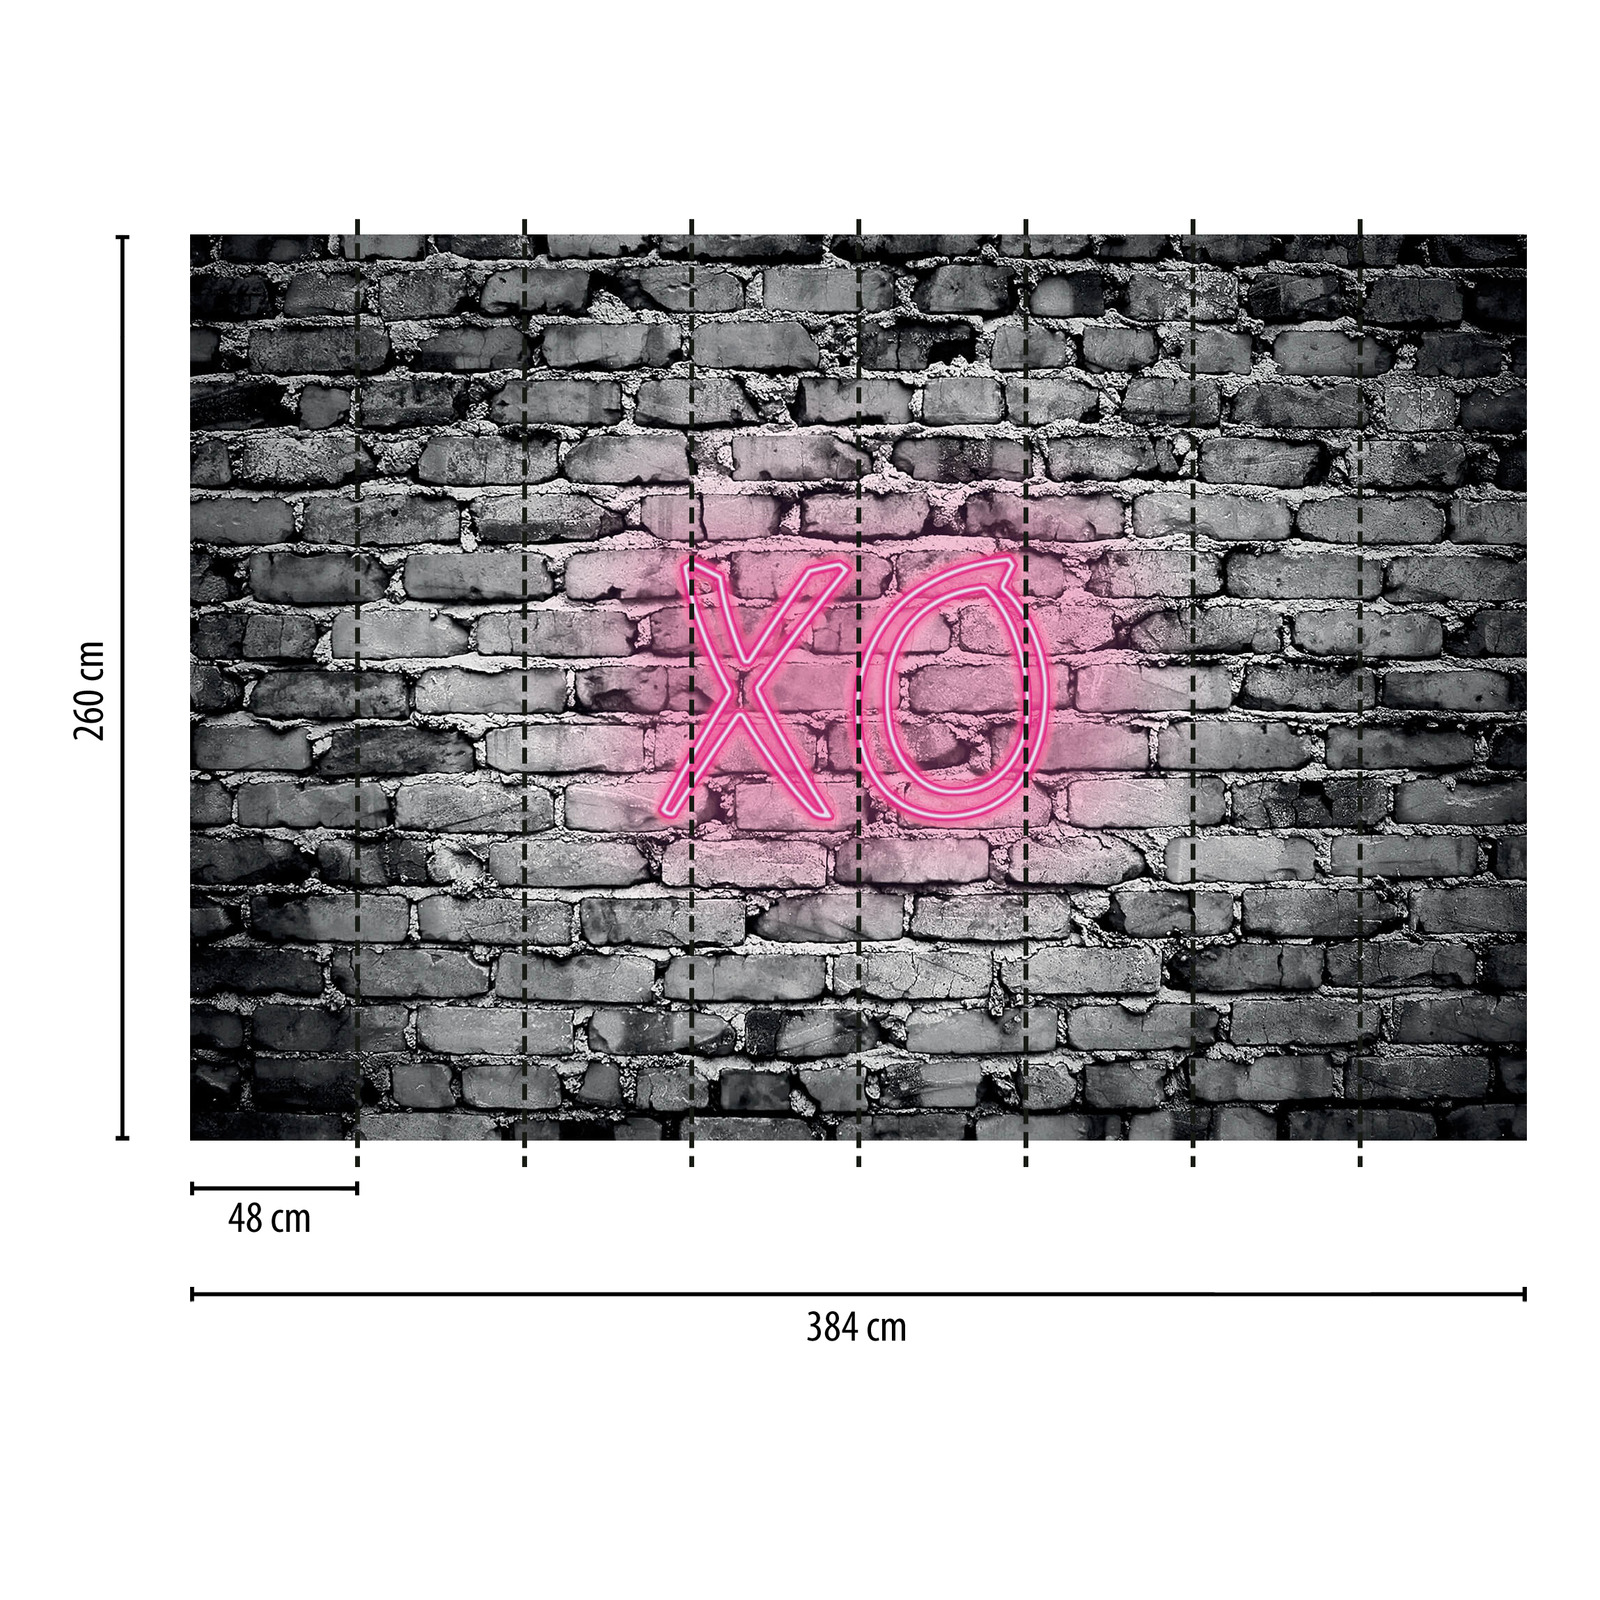             Photo wallpaper stone wall with illuminated letters XO
        